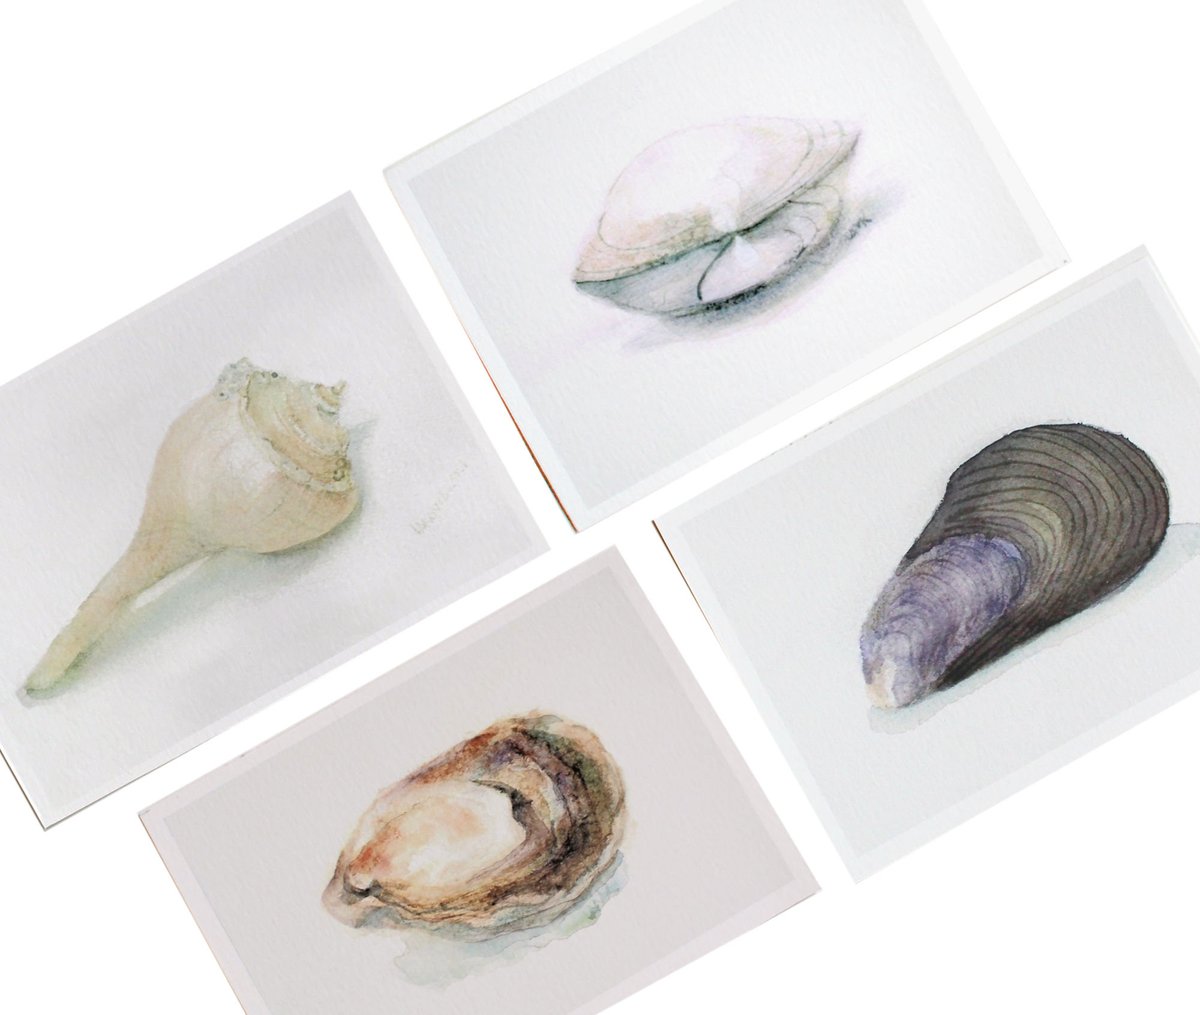 Nice Selection of Seashell Watercolor Prints #beachdecor #watercolor #artprints #wallart #walldecor #seashells #beach #shore #seashore #beachhouse #SycamoreWoodStudio #SMILEtt23 #shopsmall #supportsmallbusiness sycamorewoodstudio.etsy.com/listing/146577…